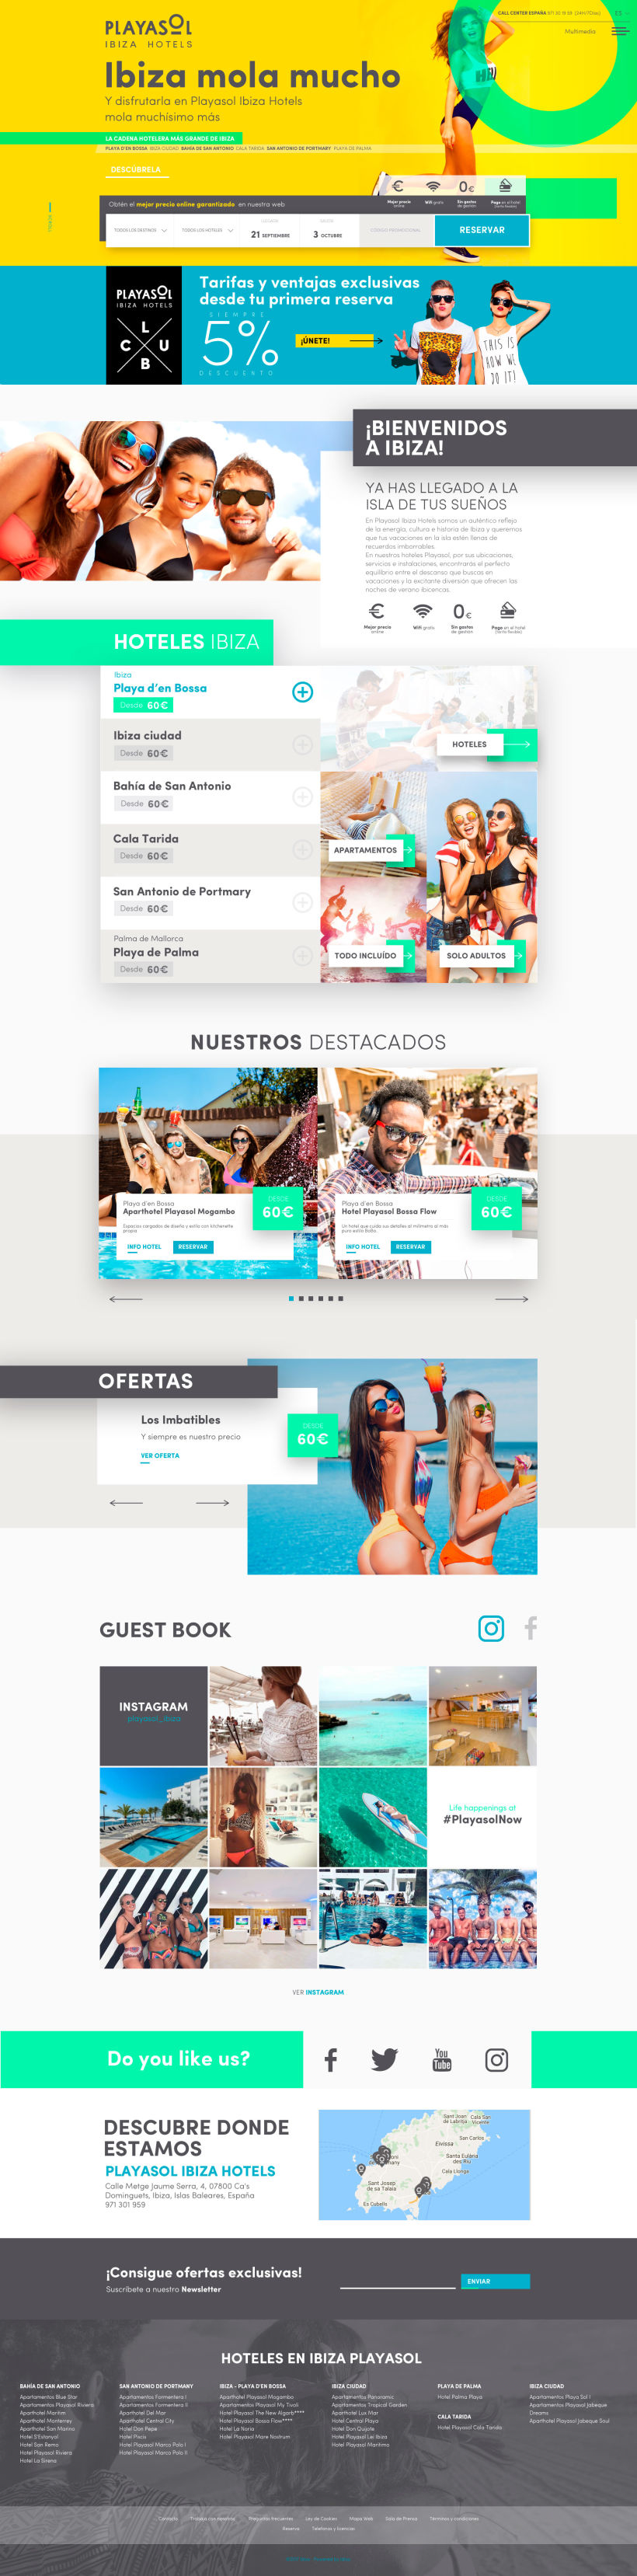 Web Playasol Ibiza Hotels  0